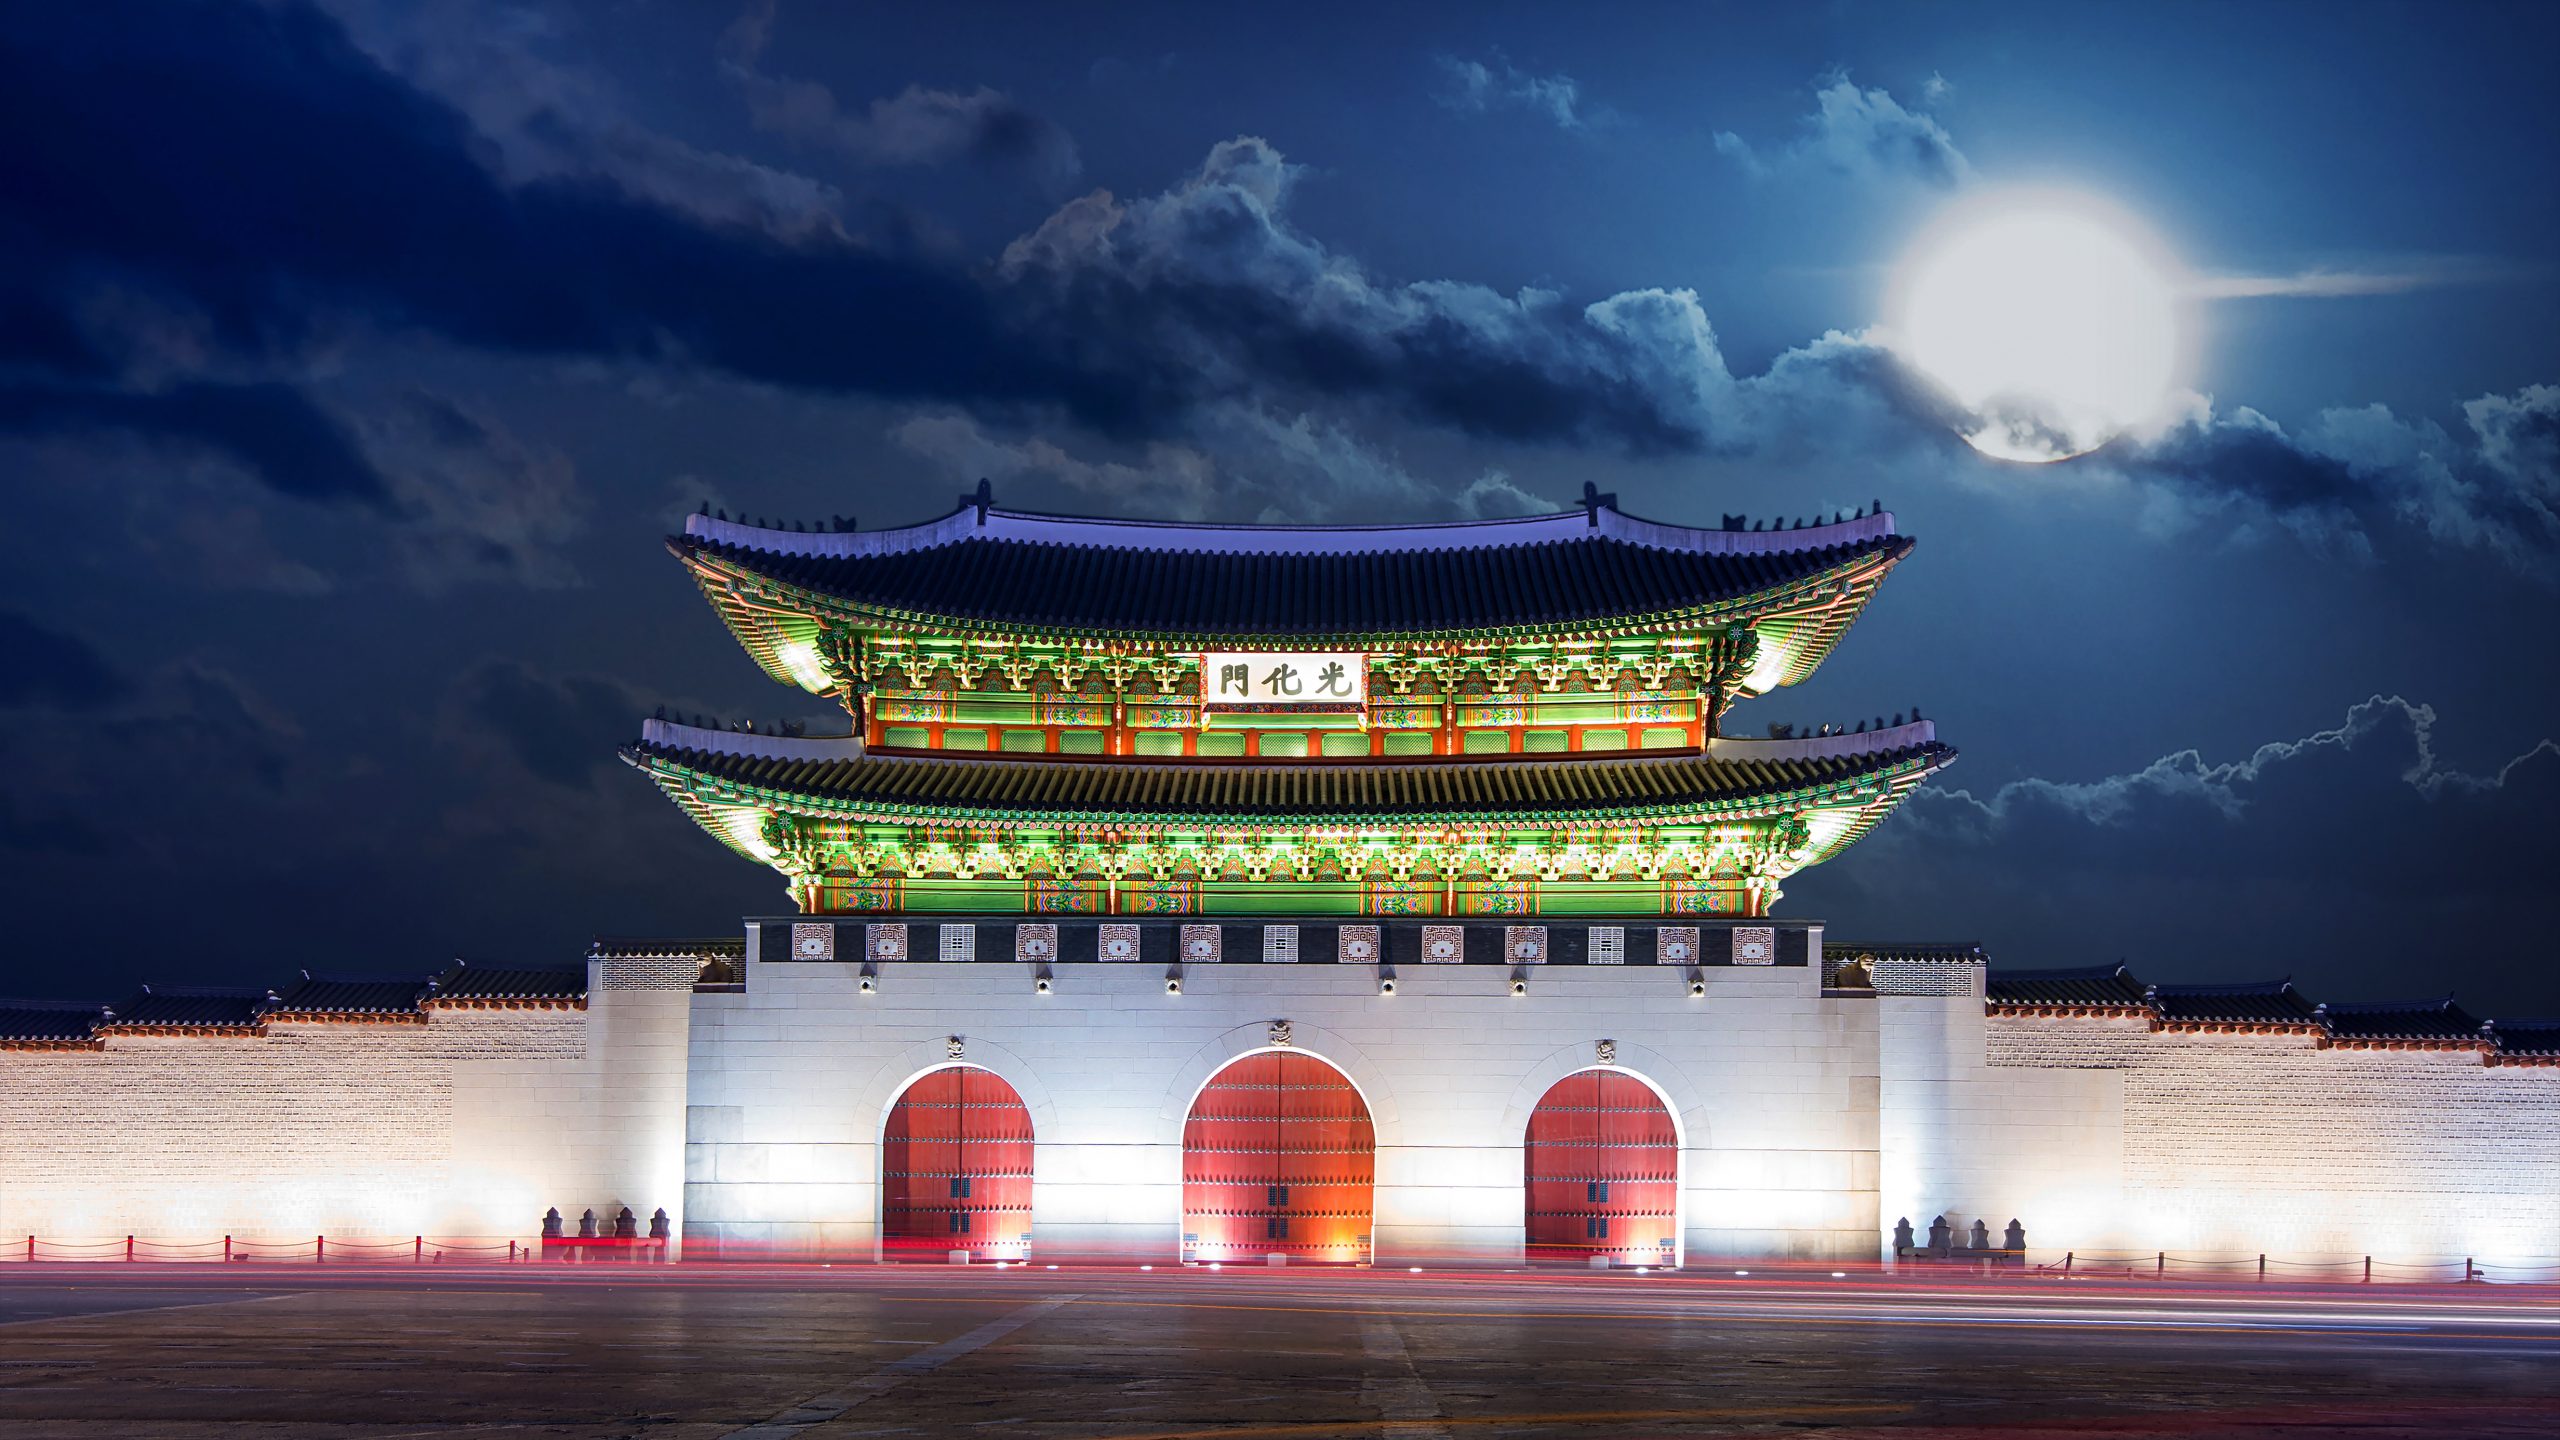 Gyeongbokgung palace and full moon at night in Seoul, South Kore